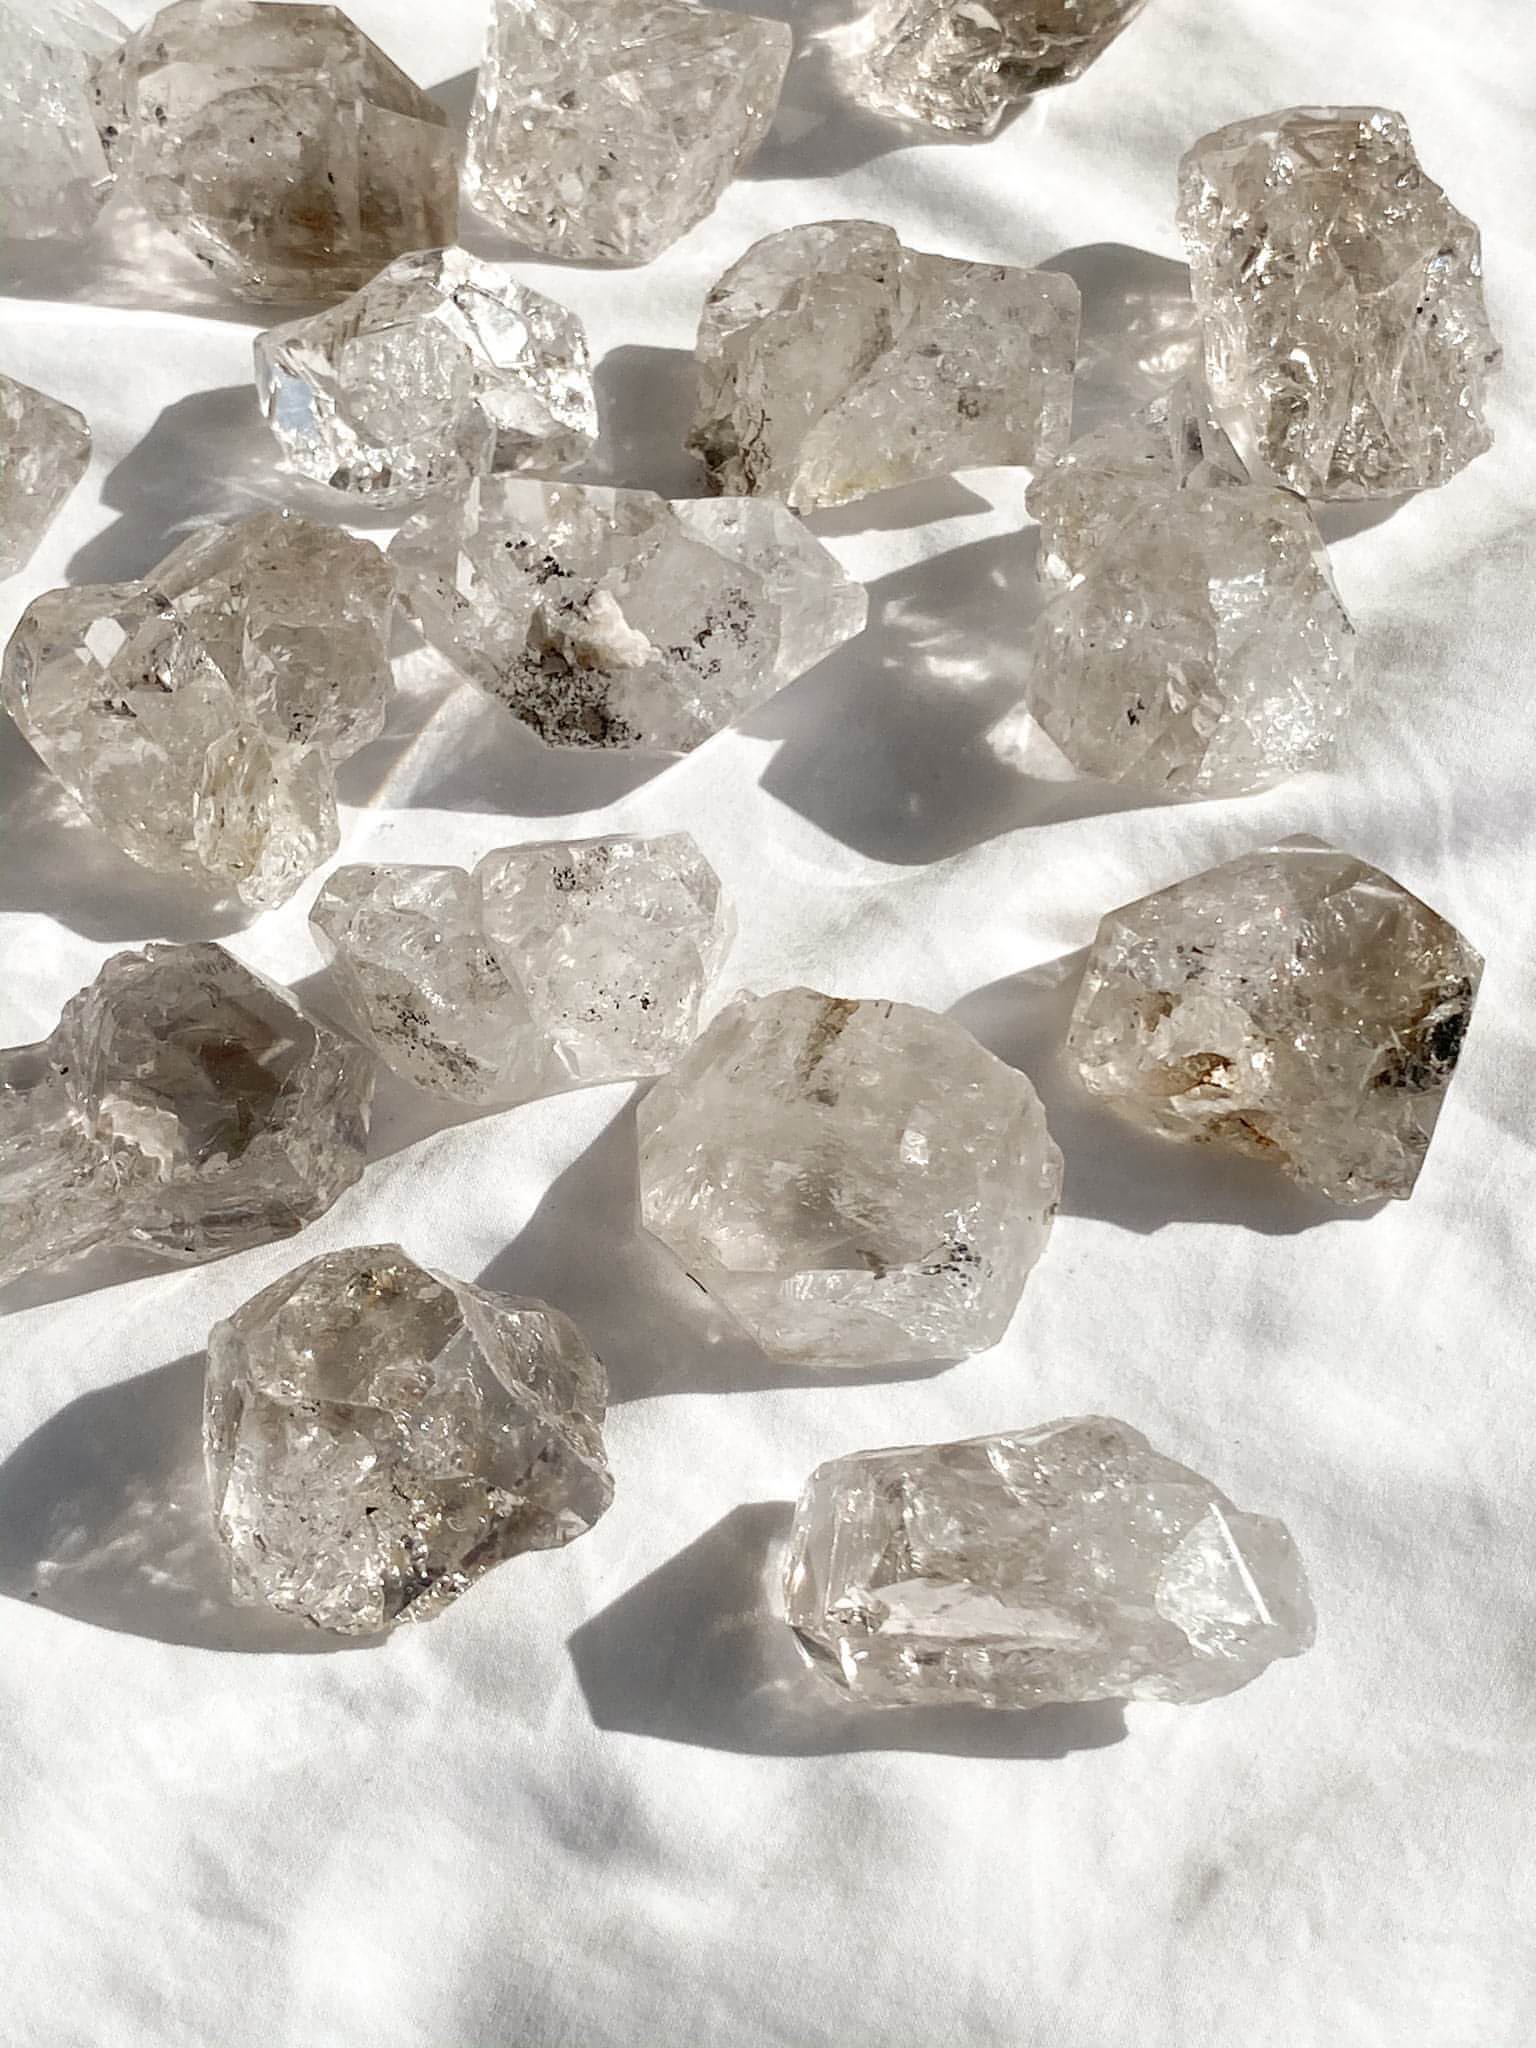 Large Rare Herkimer Diamond Imperfect Beautiful Raw Specimen